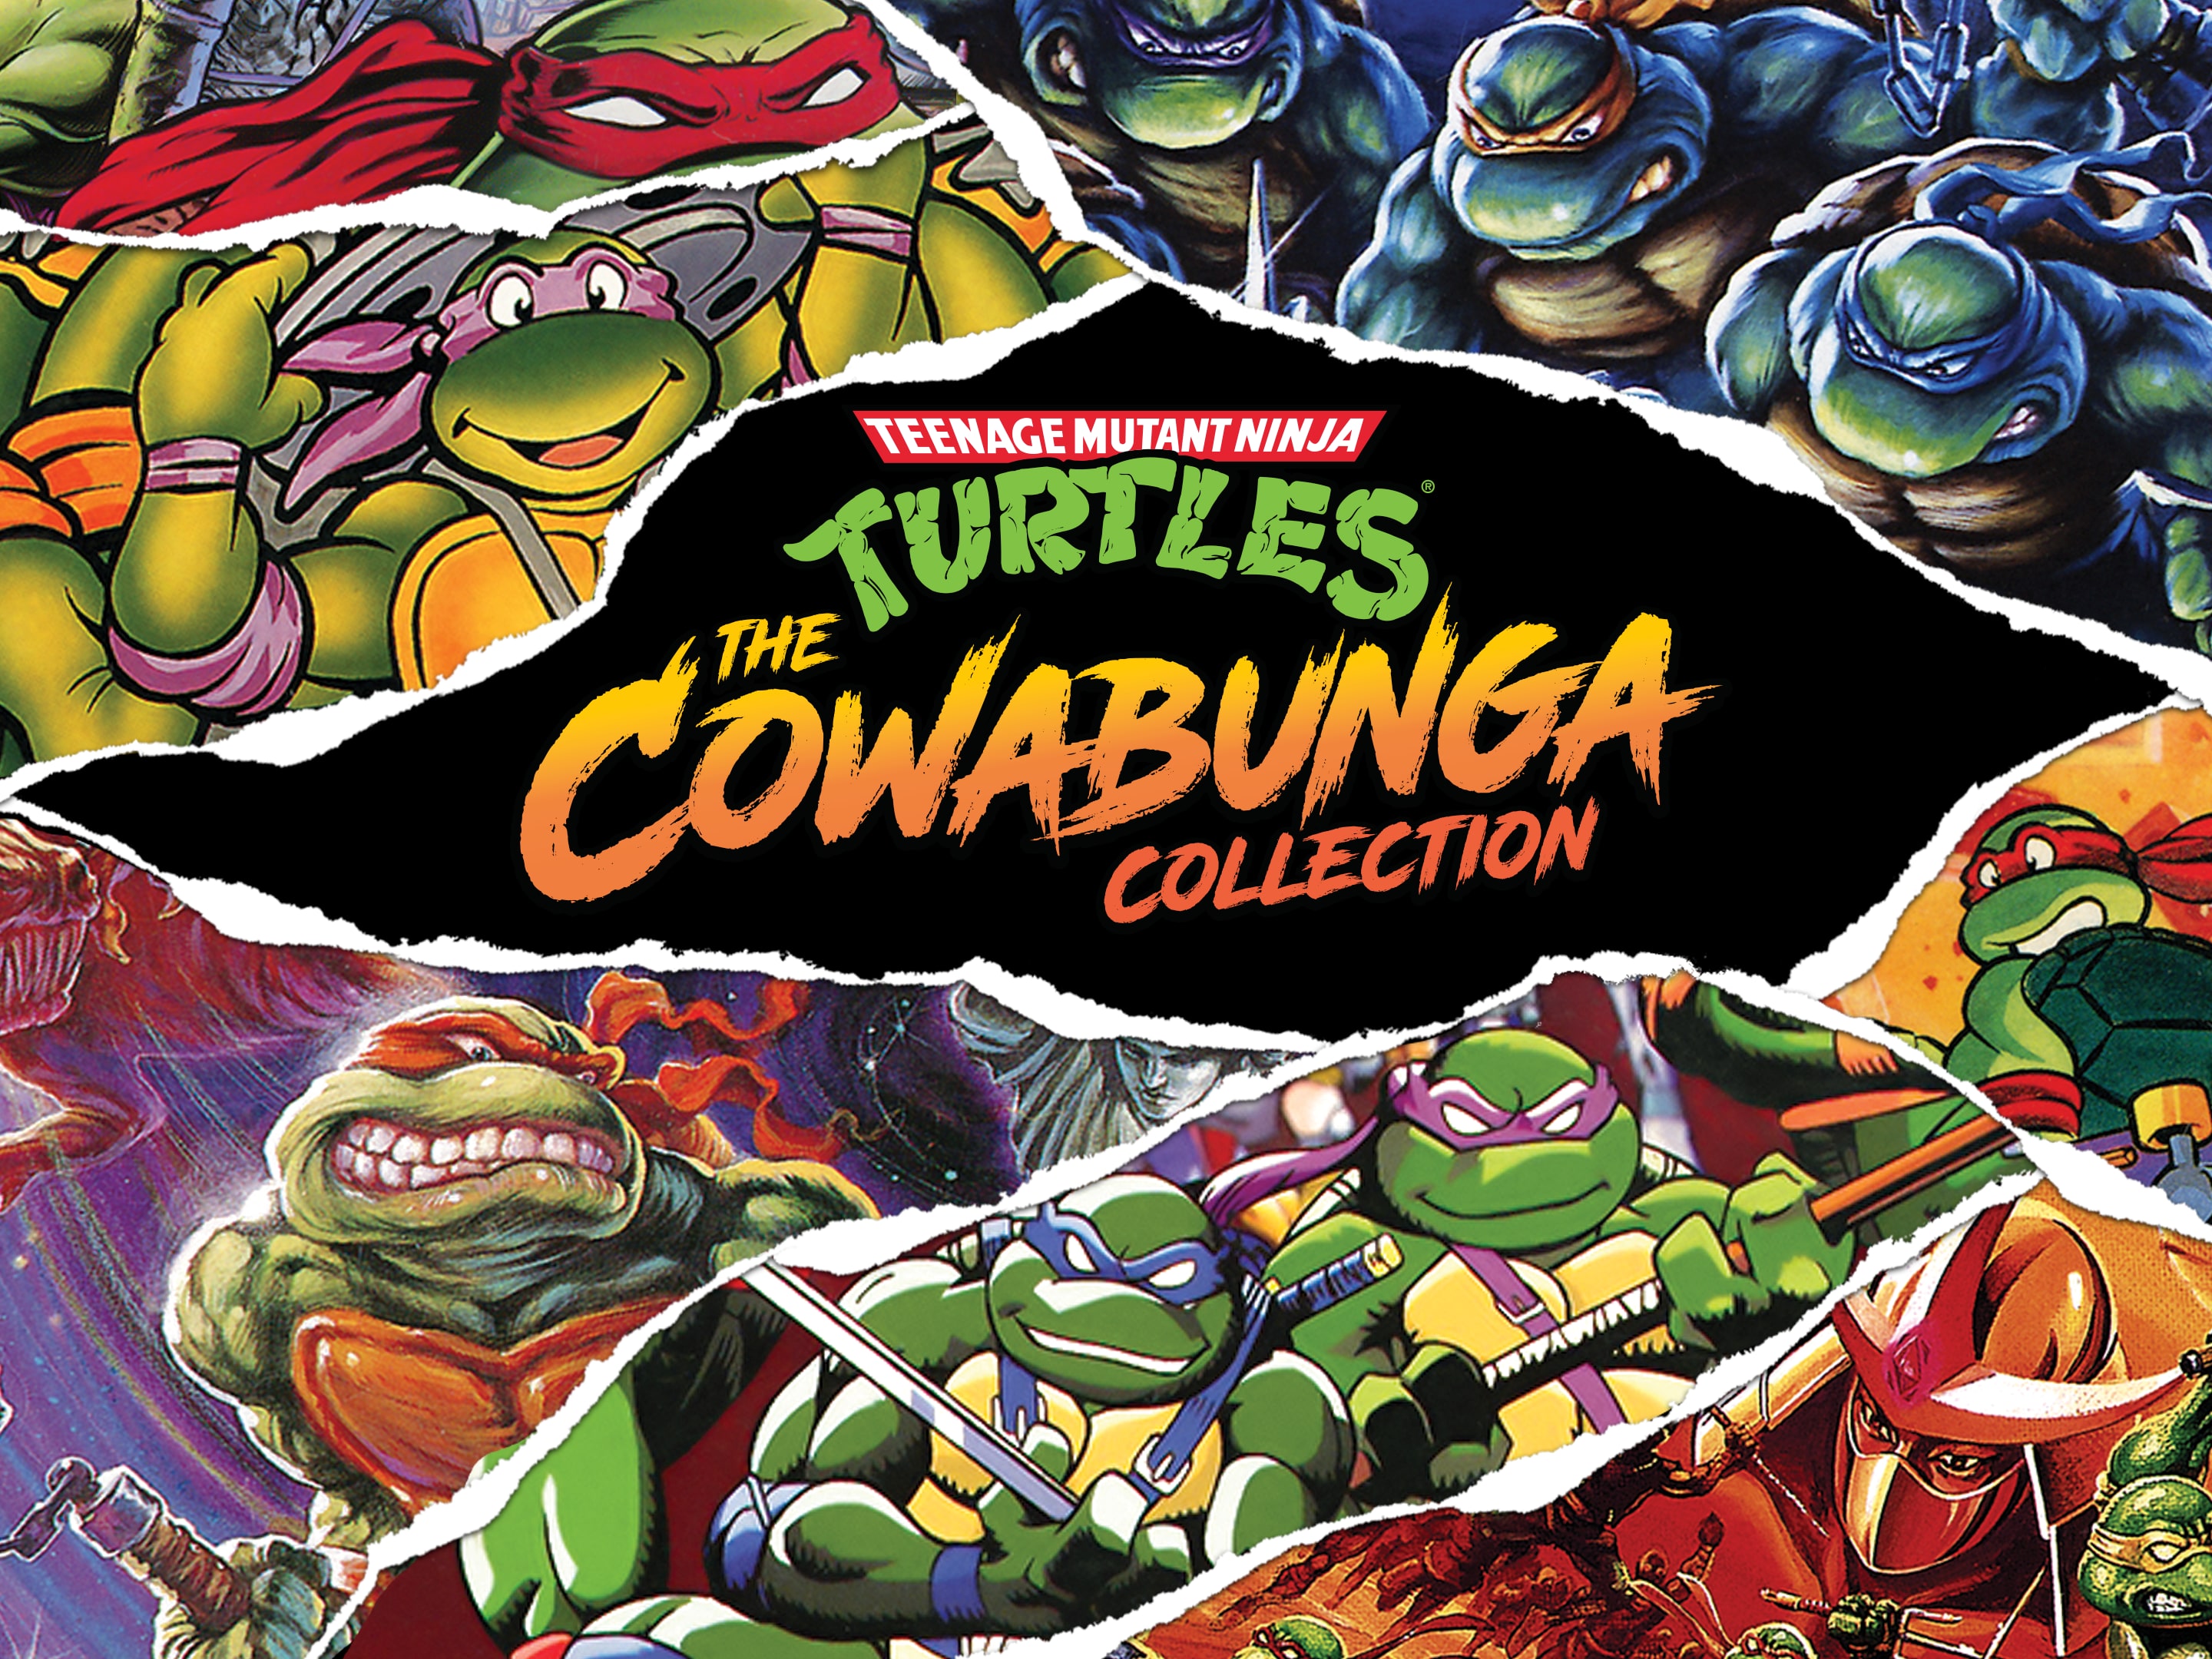 Collection PS5 Ninja Teenage The Turtles: Mutant PS4 Cowabunga &